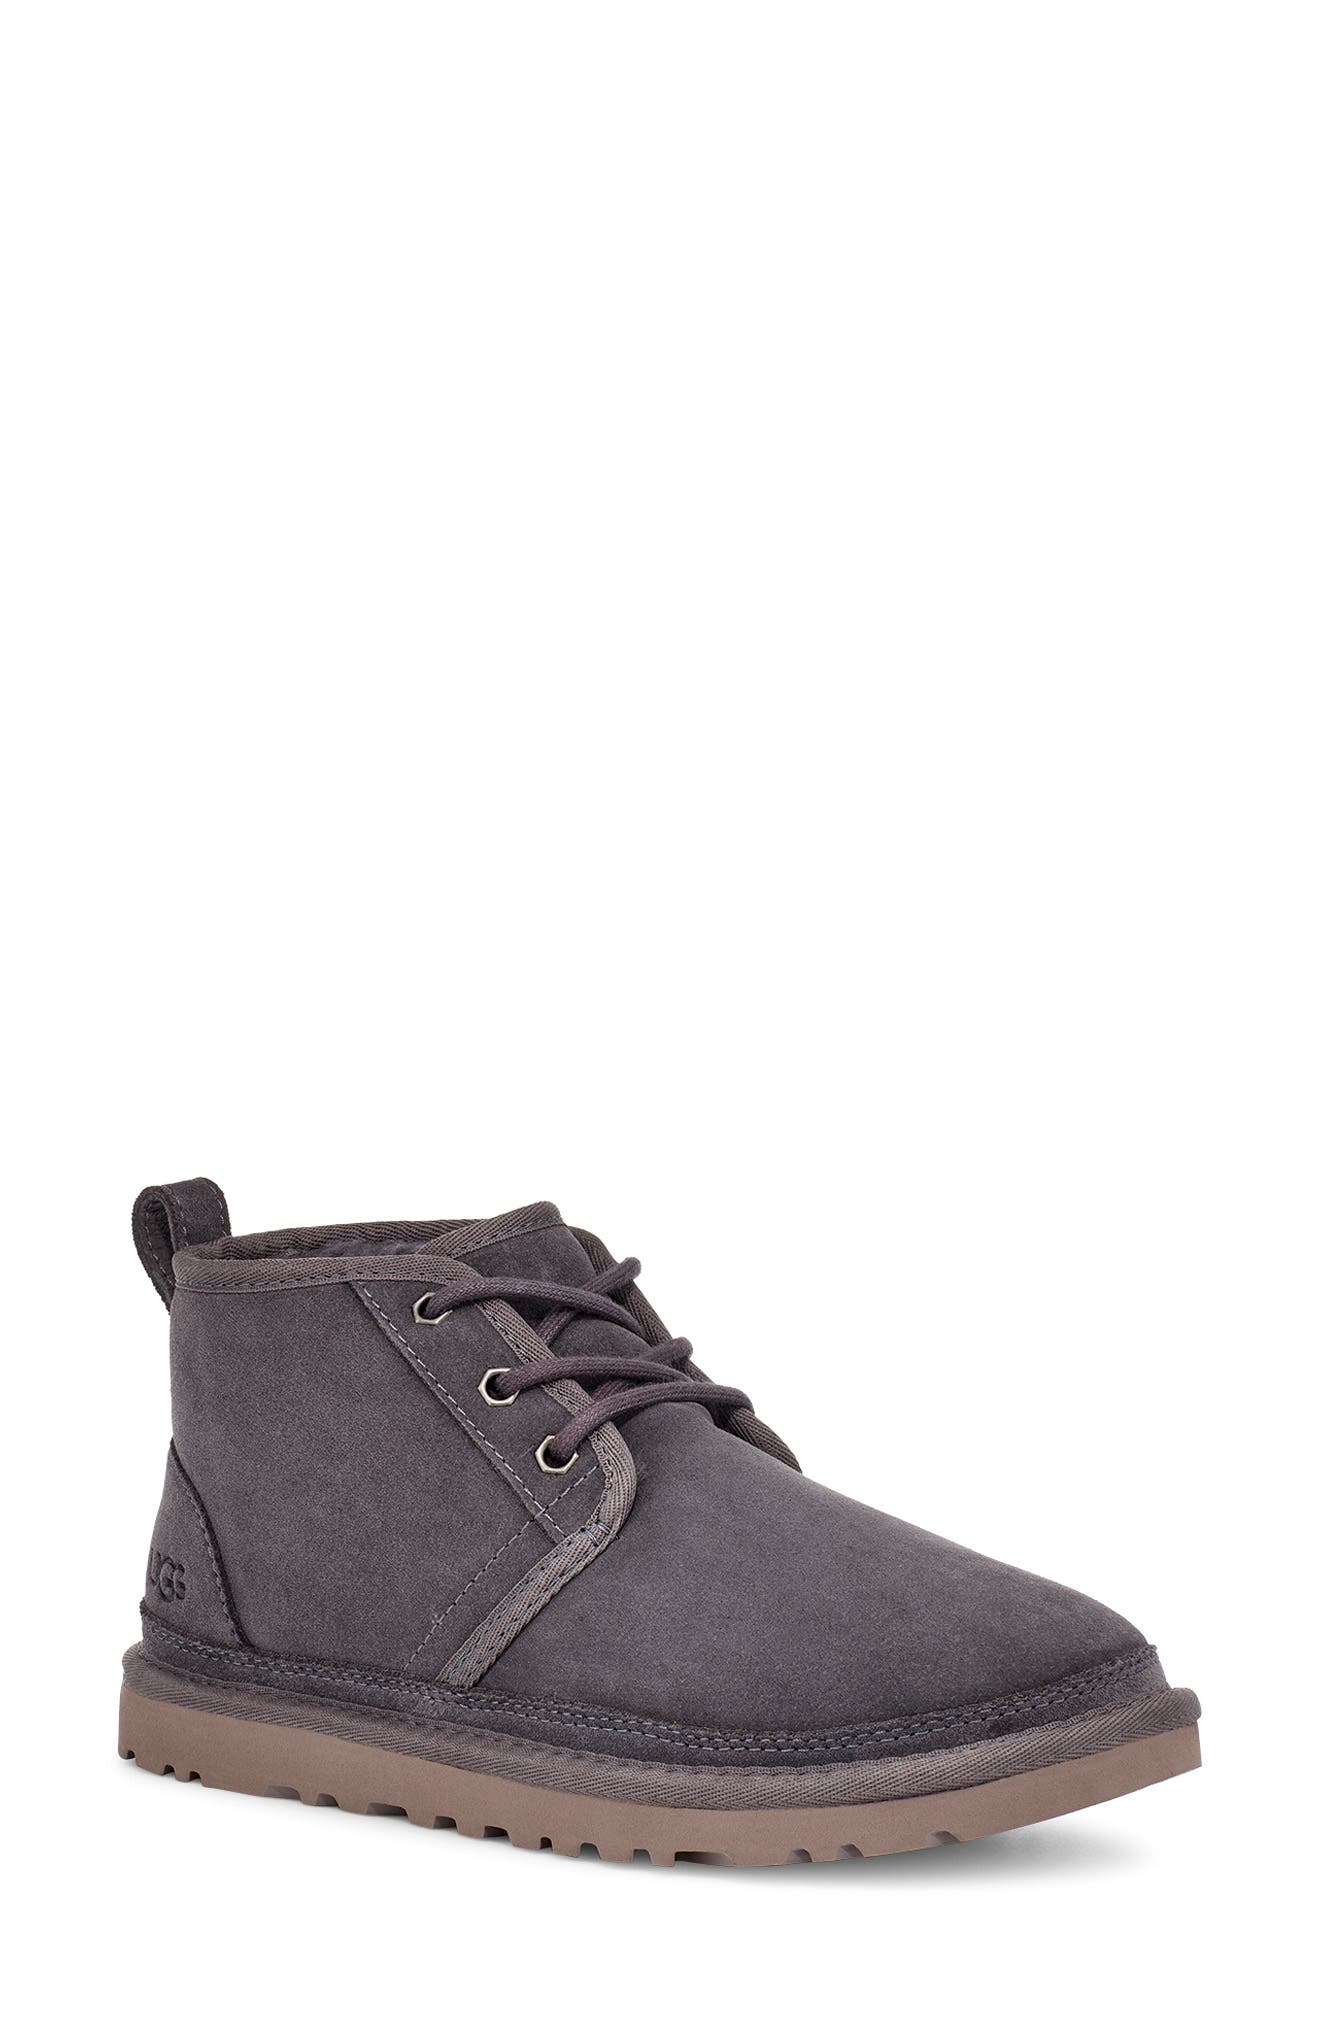 grey short ugg boots sale